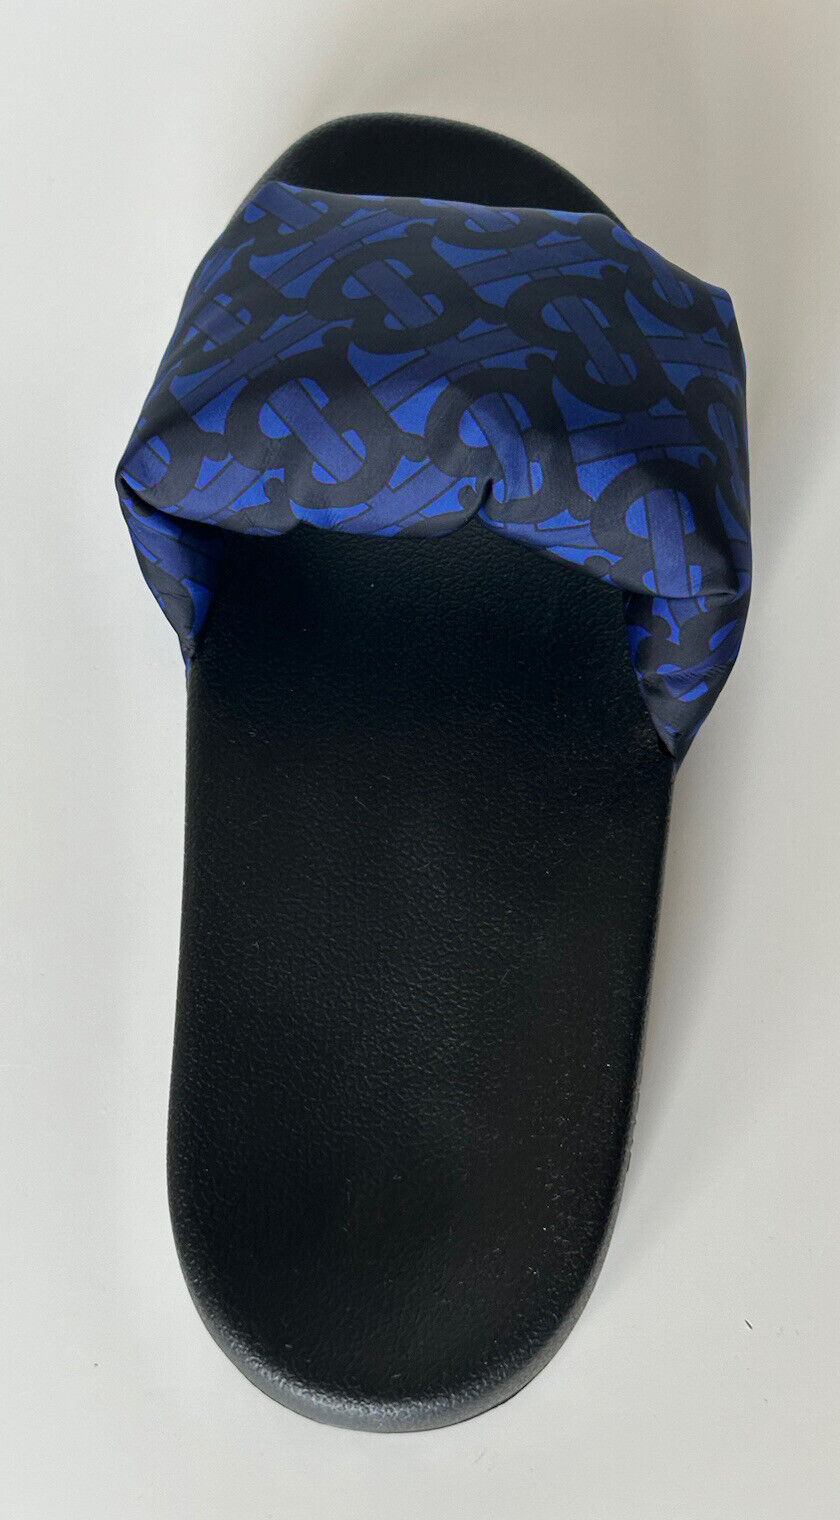 Мужские шлепанцы Burberry Furley Puff TB за 570 долларов США, синие сандалии 9 США (42) 8048585 